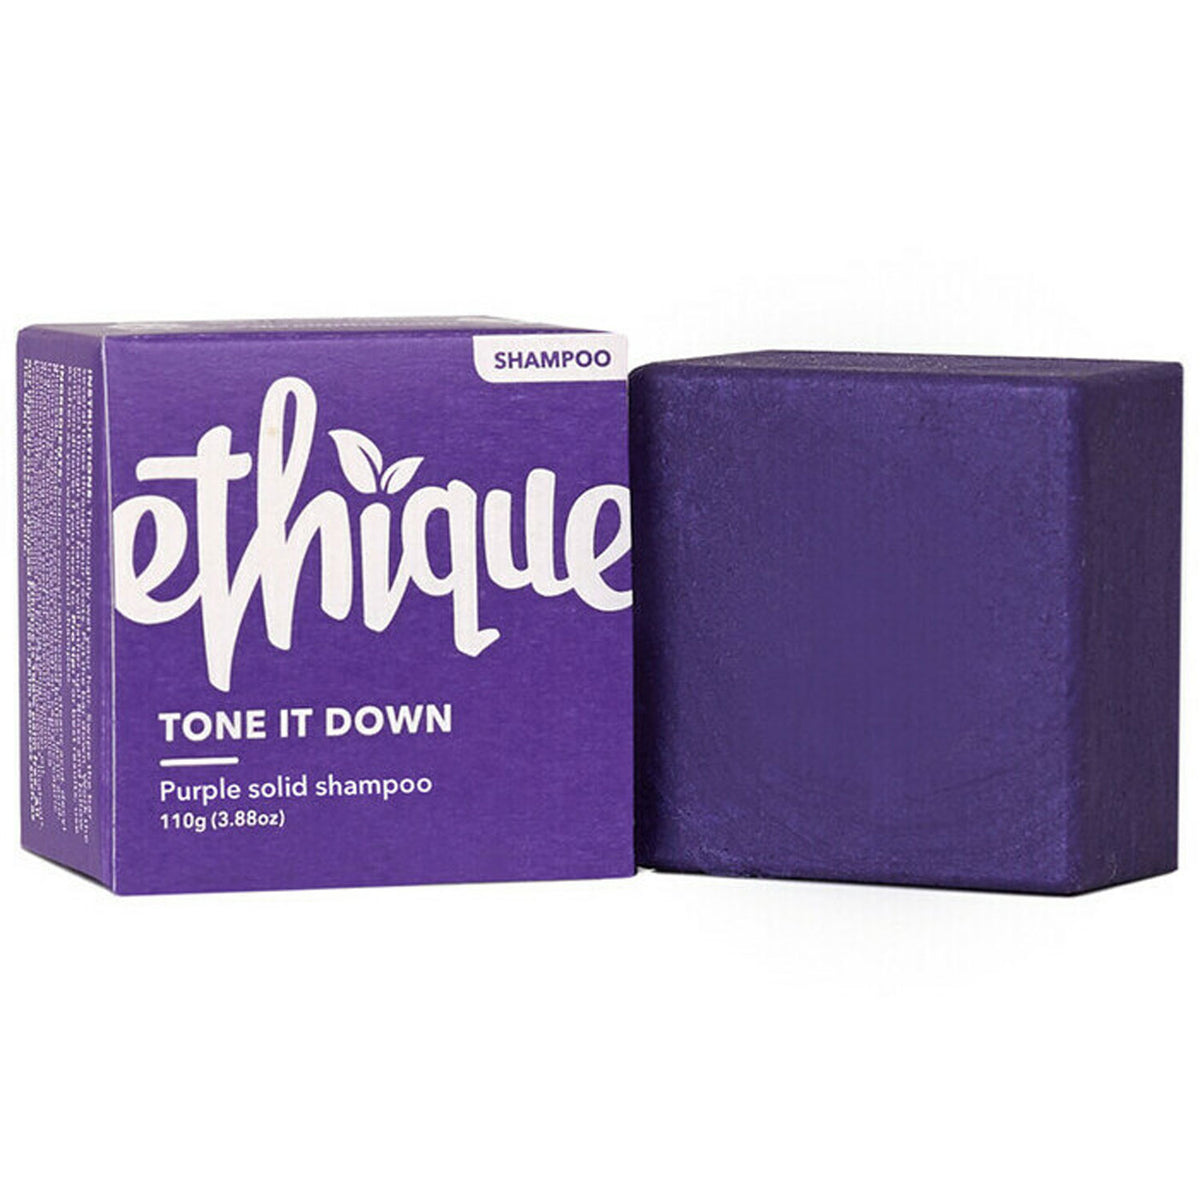 Ethique Tone It Down Solid Shampoo Bar 110g - Orcadia